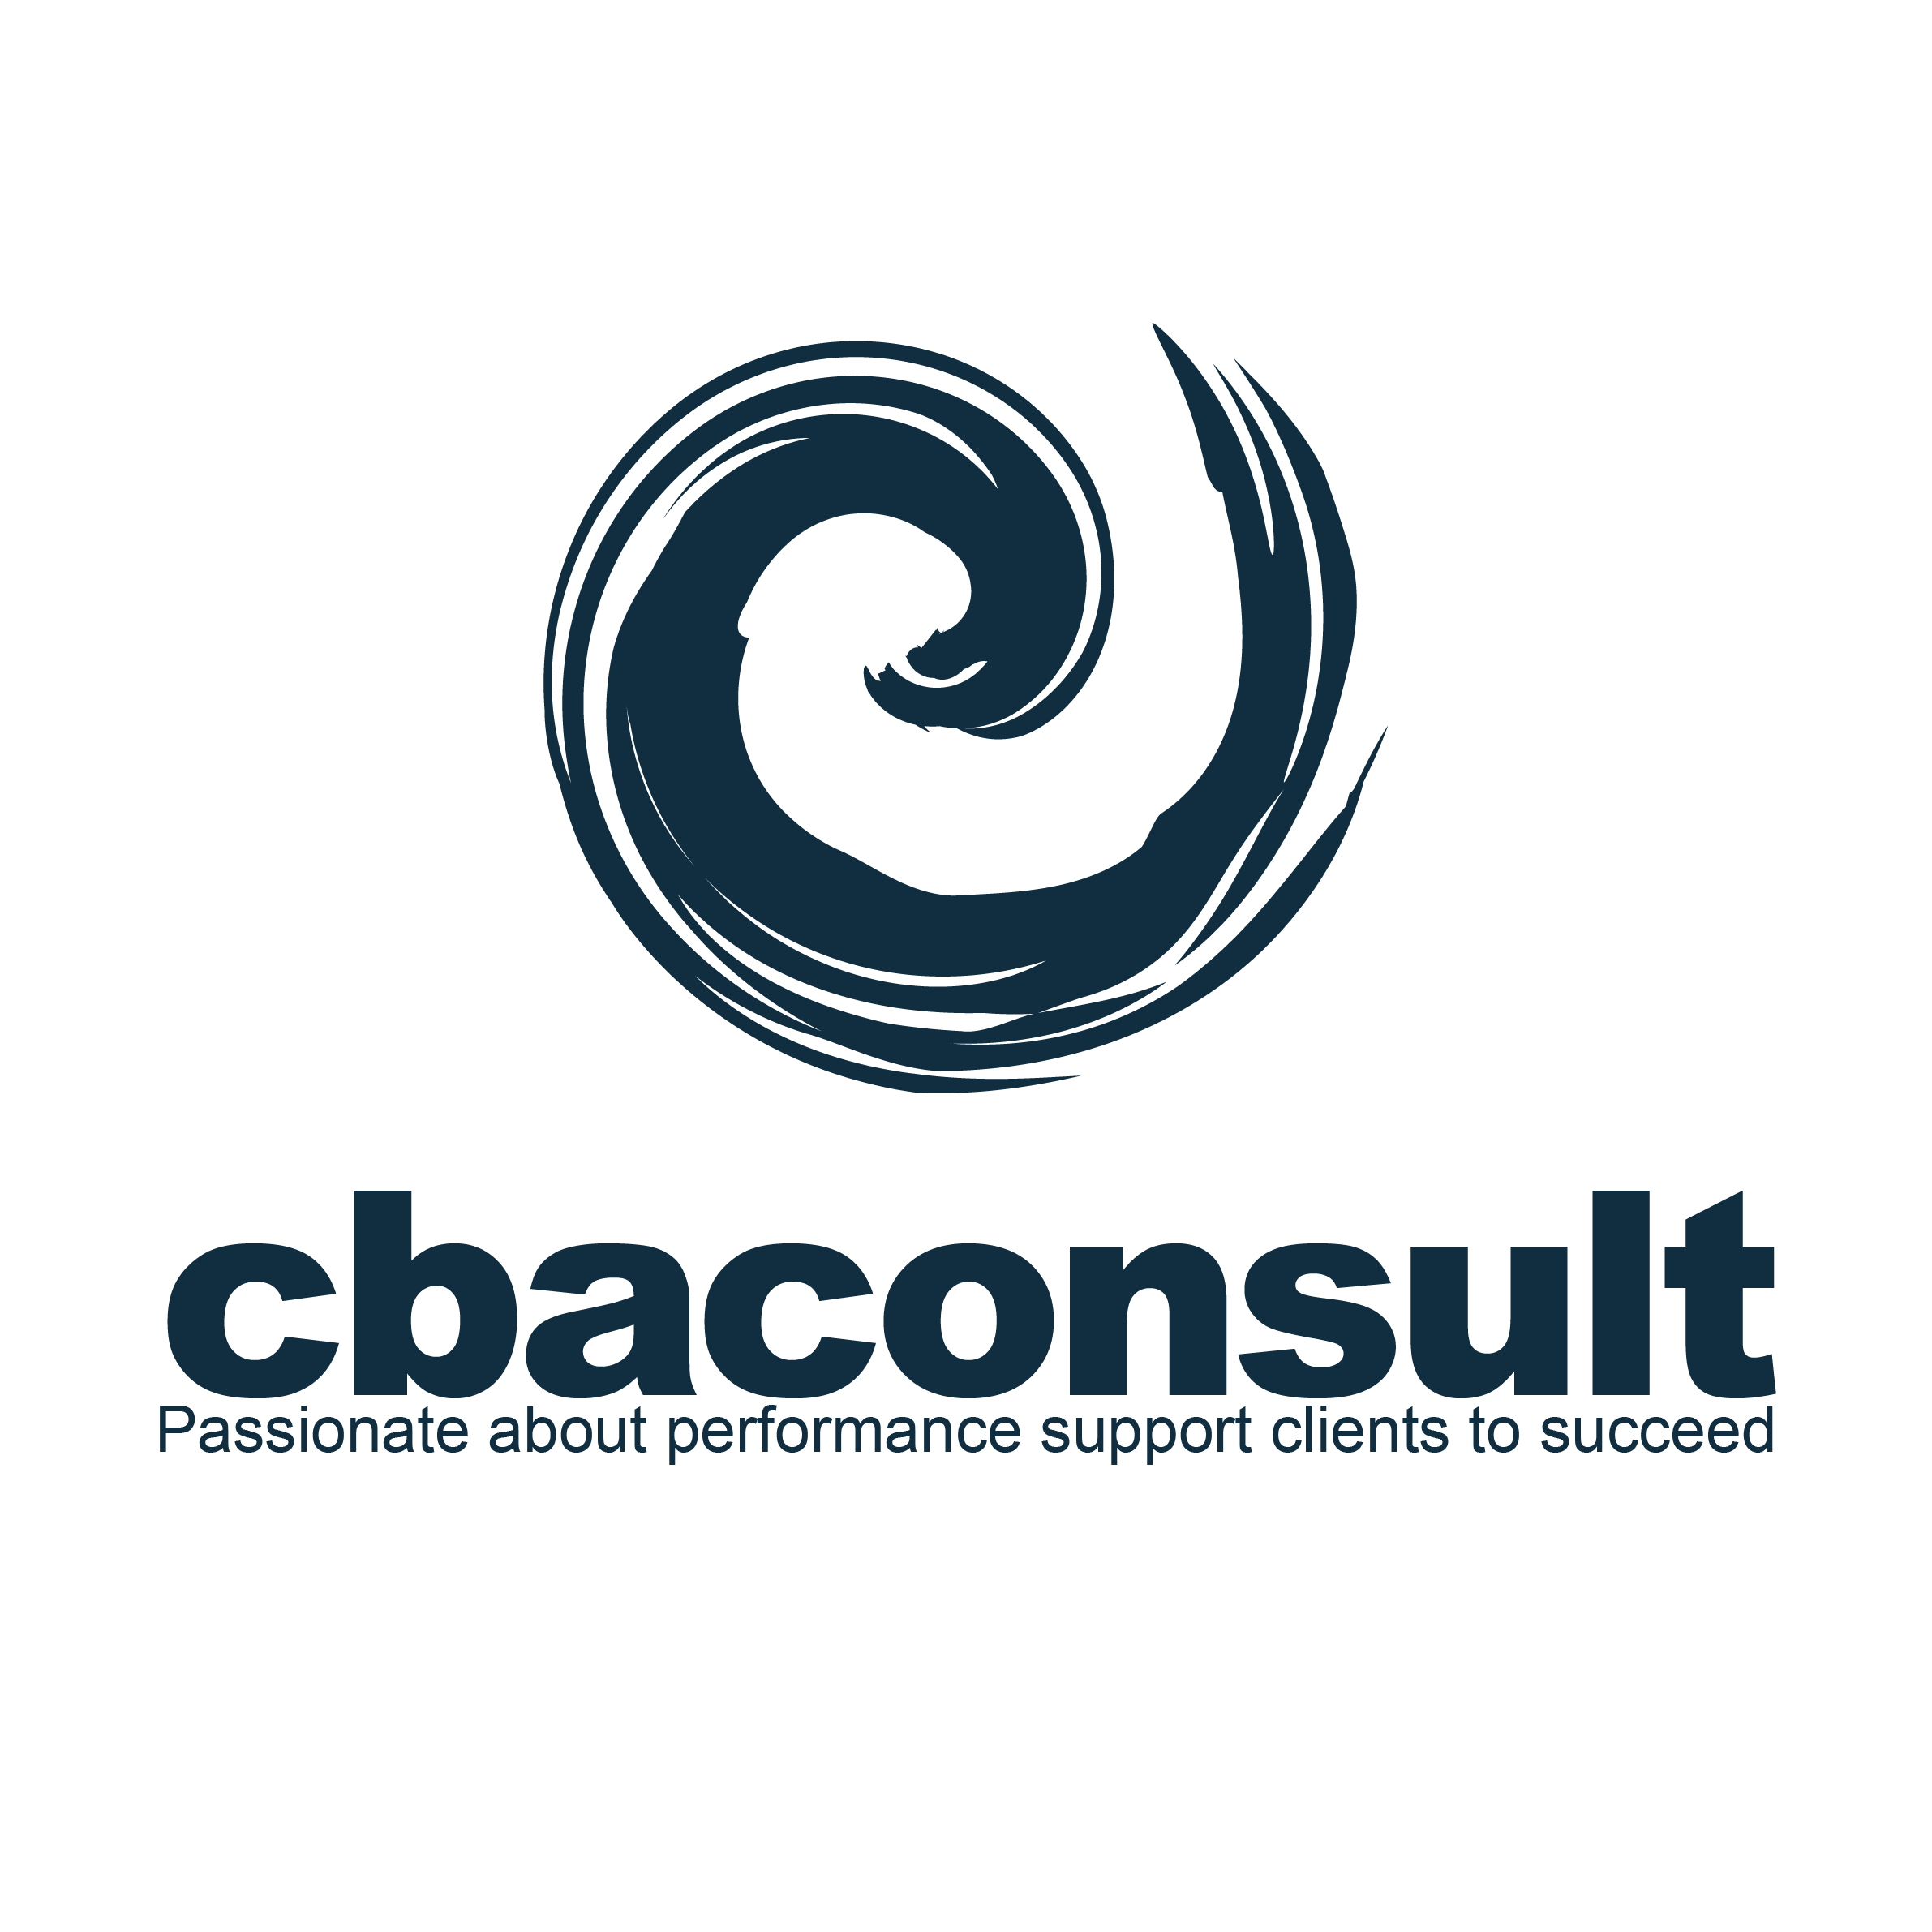 CBA Consult Components